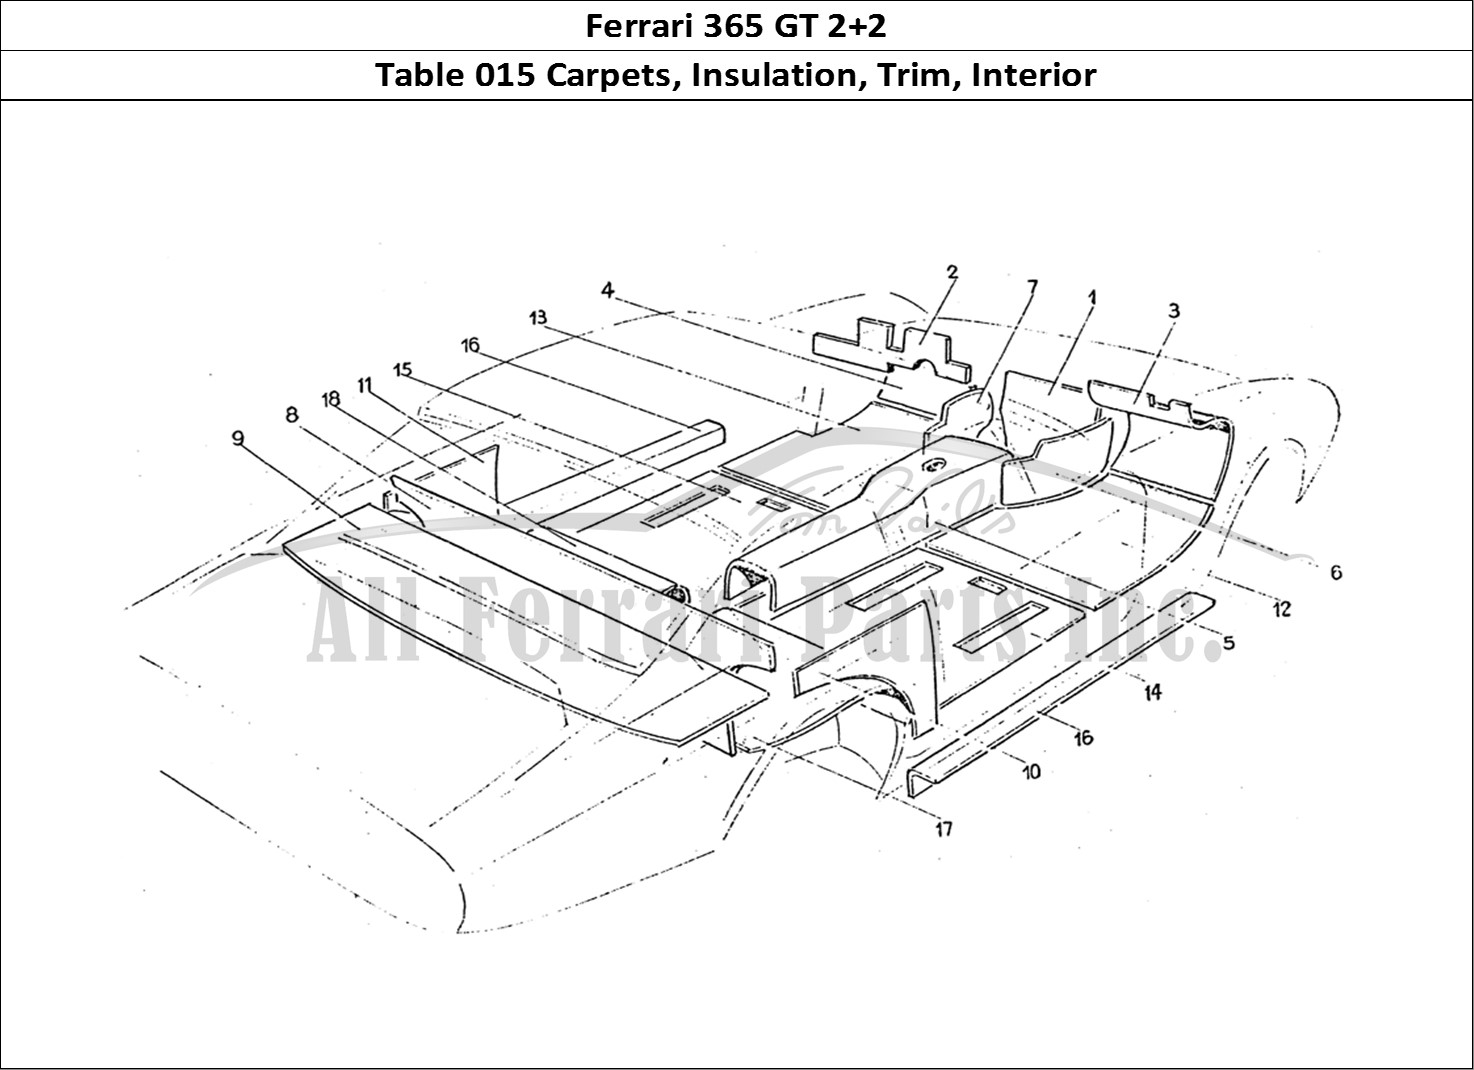 Ferrari Parts Ferrari 365 GT 2+2 (Coachwork) Page 015 Inner felt insolation tri